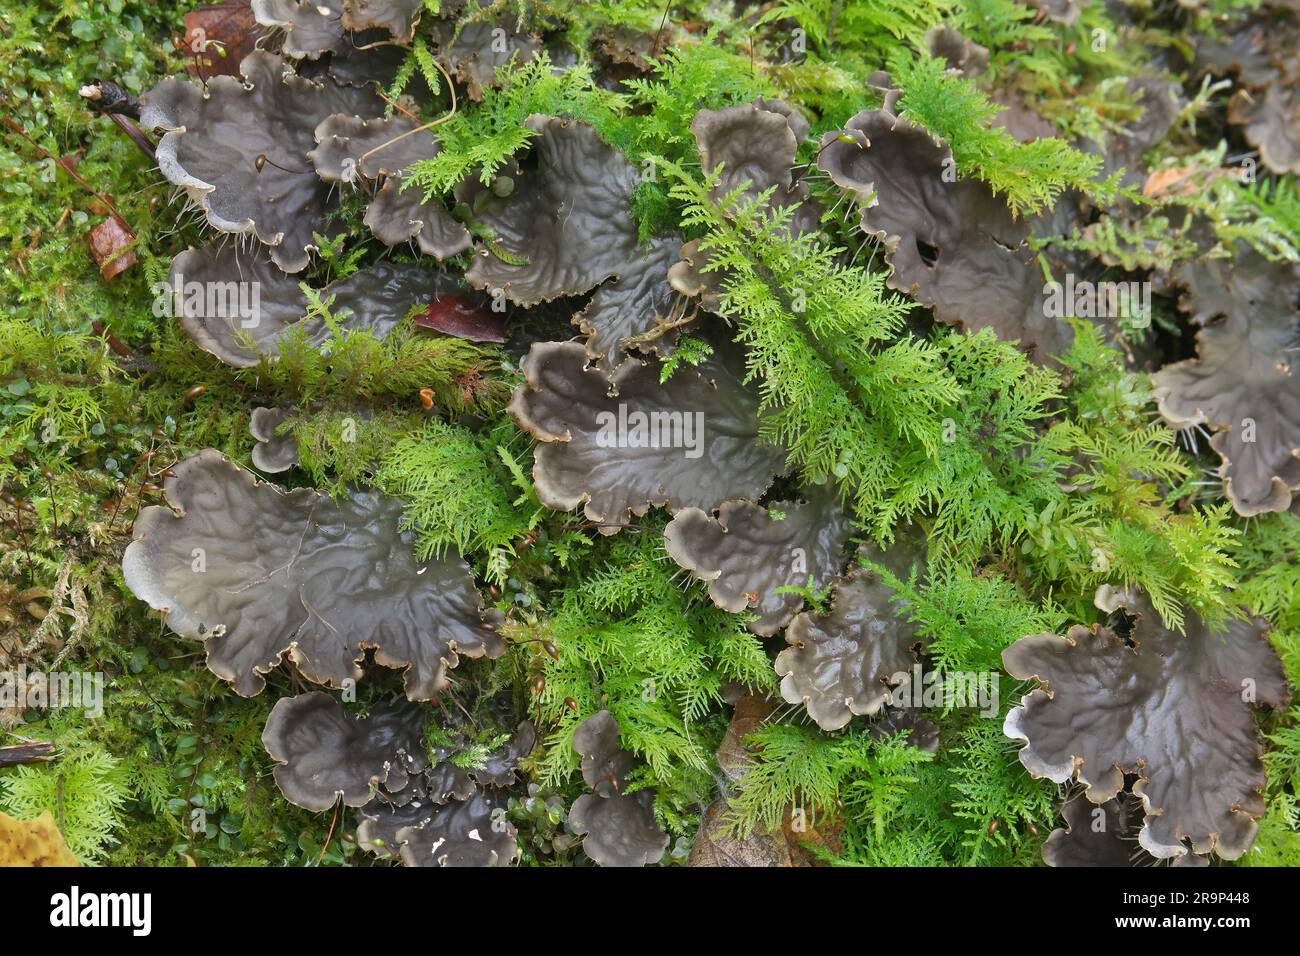 Foliose lichen (Peltigera degenii) growing on the forest floor among carpet moss (Hypnum sp.). Bavaria, Germany Stock Photo